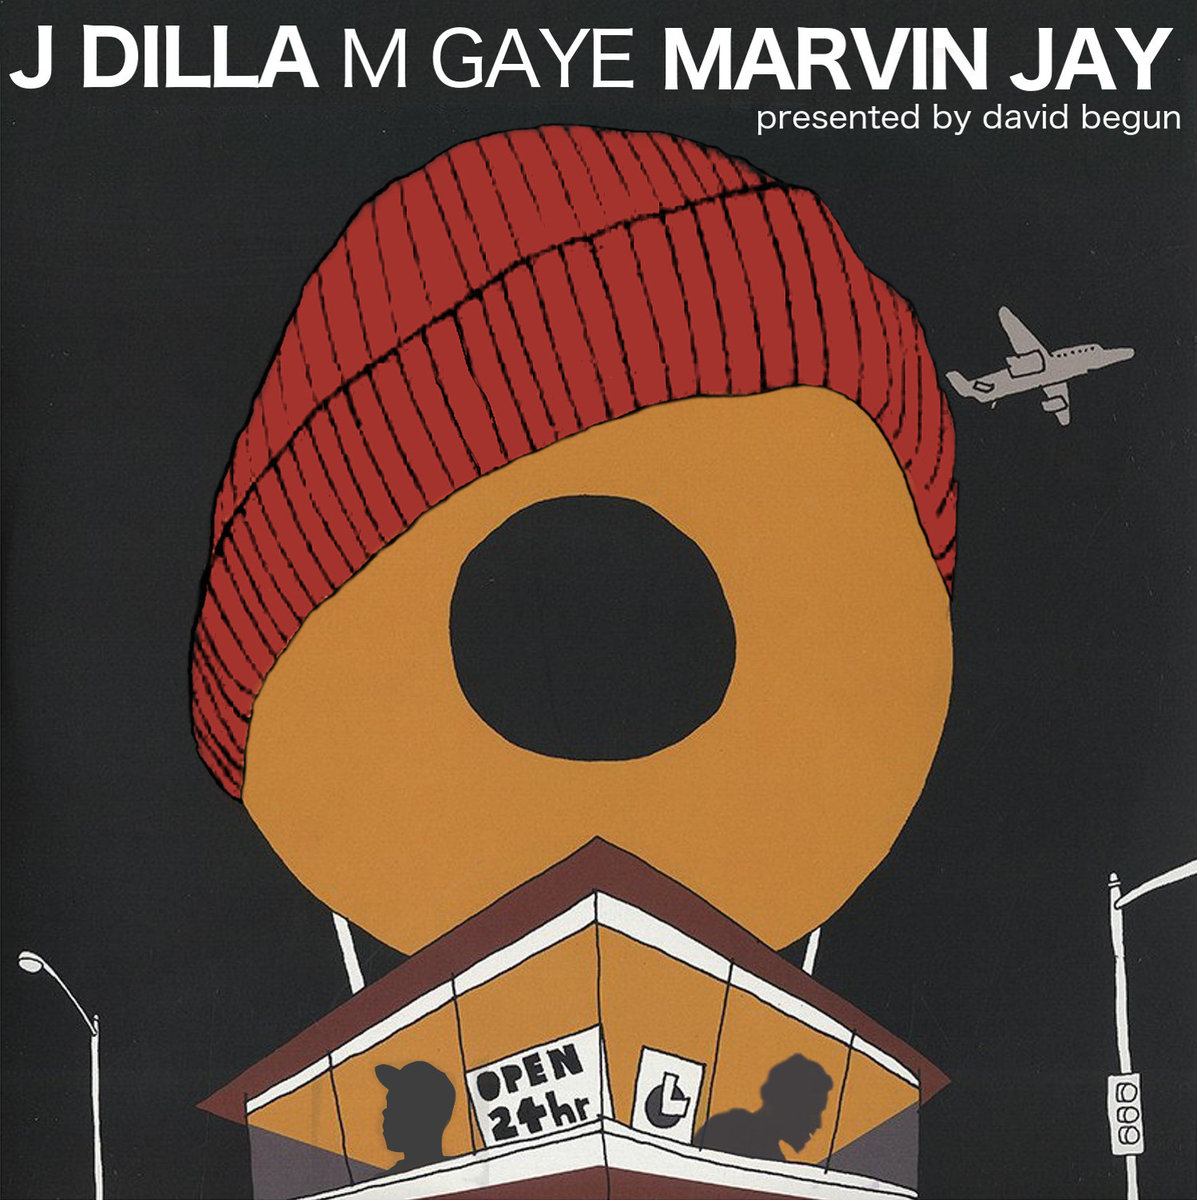 Free Download: David Begun – Marvin Jay